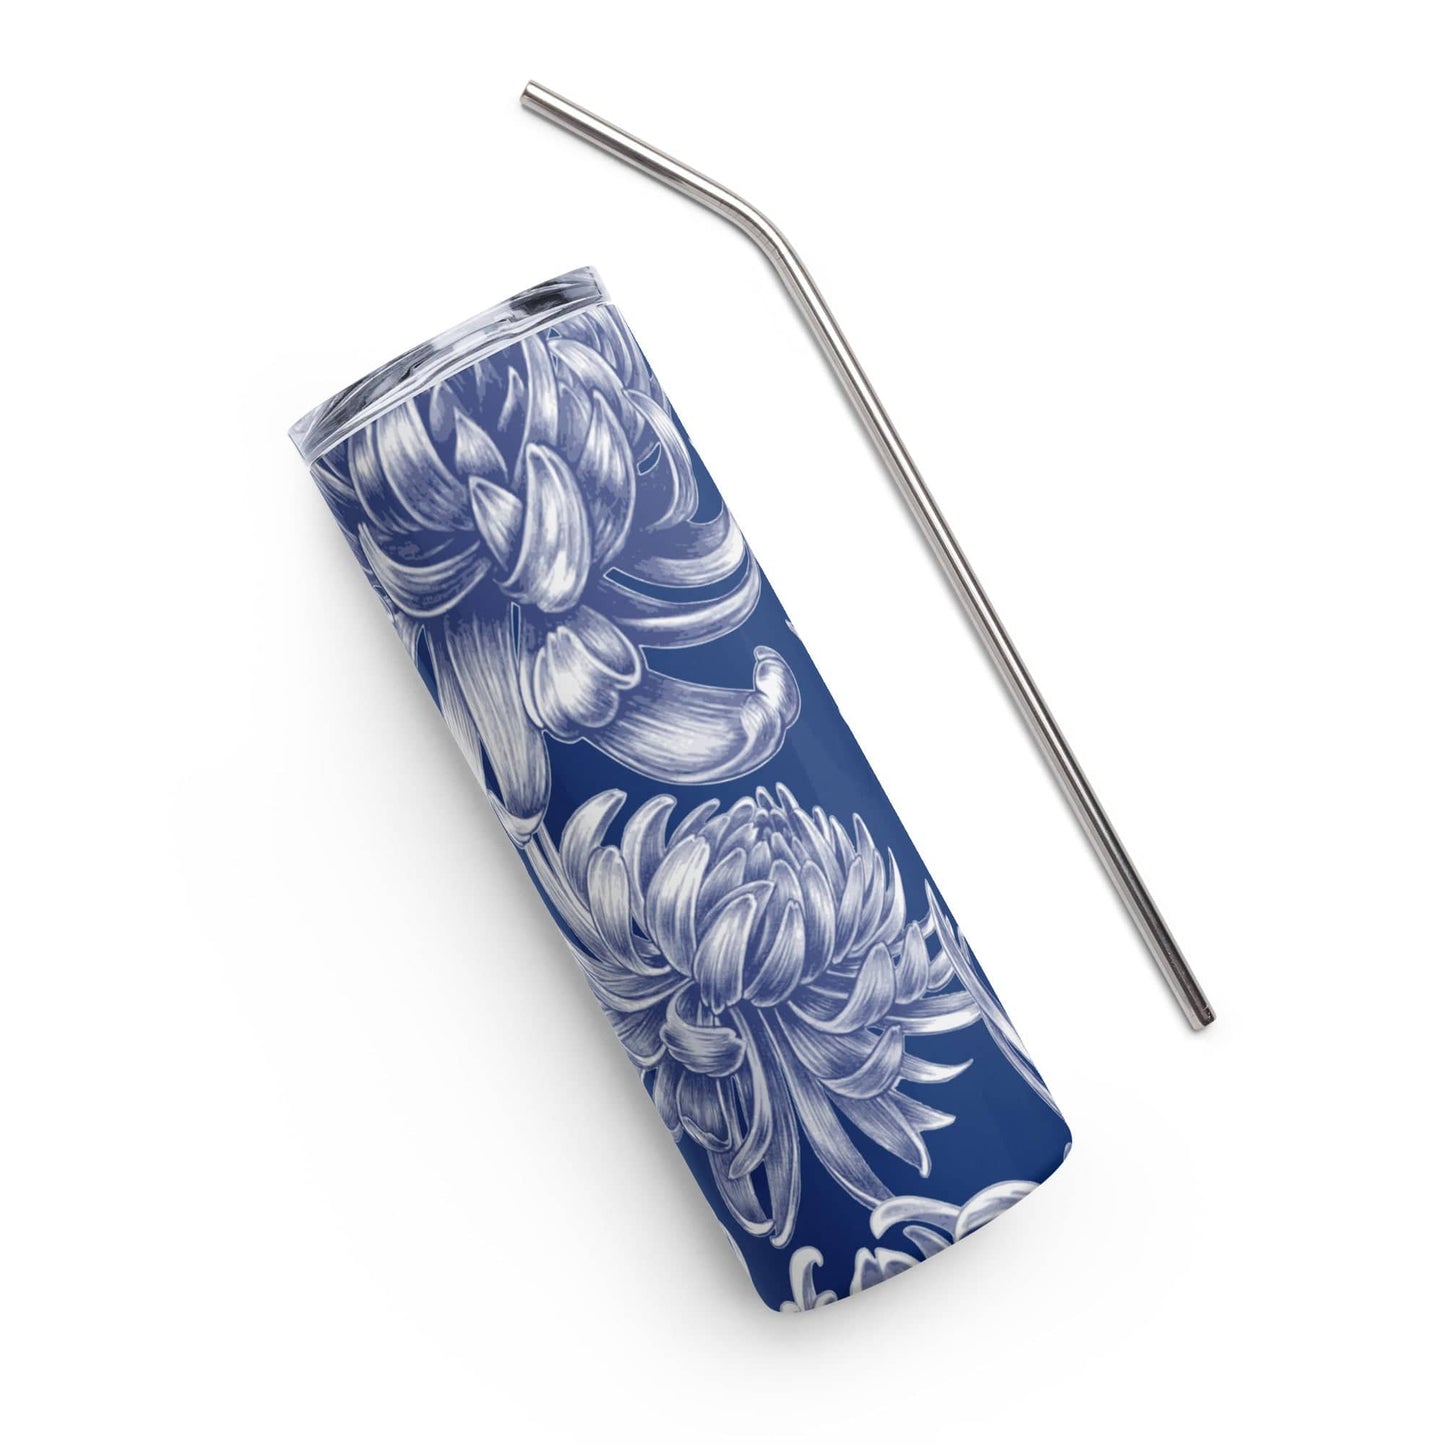 Floral blue Stainless steel tumbler - Expressive DeZien 